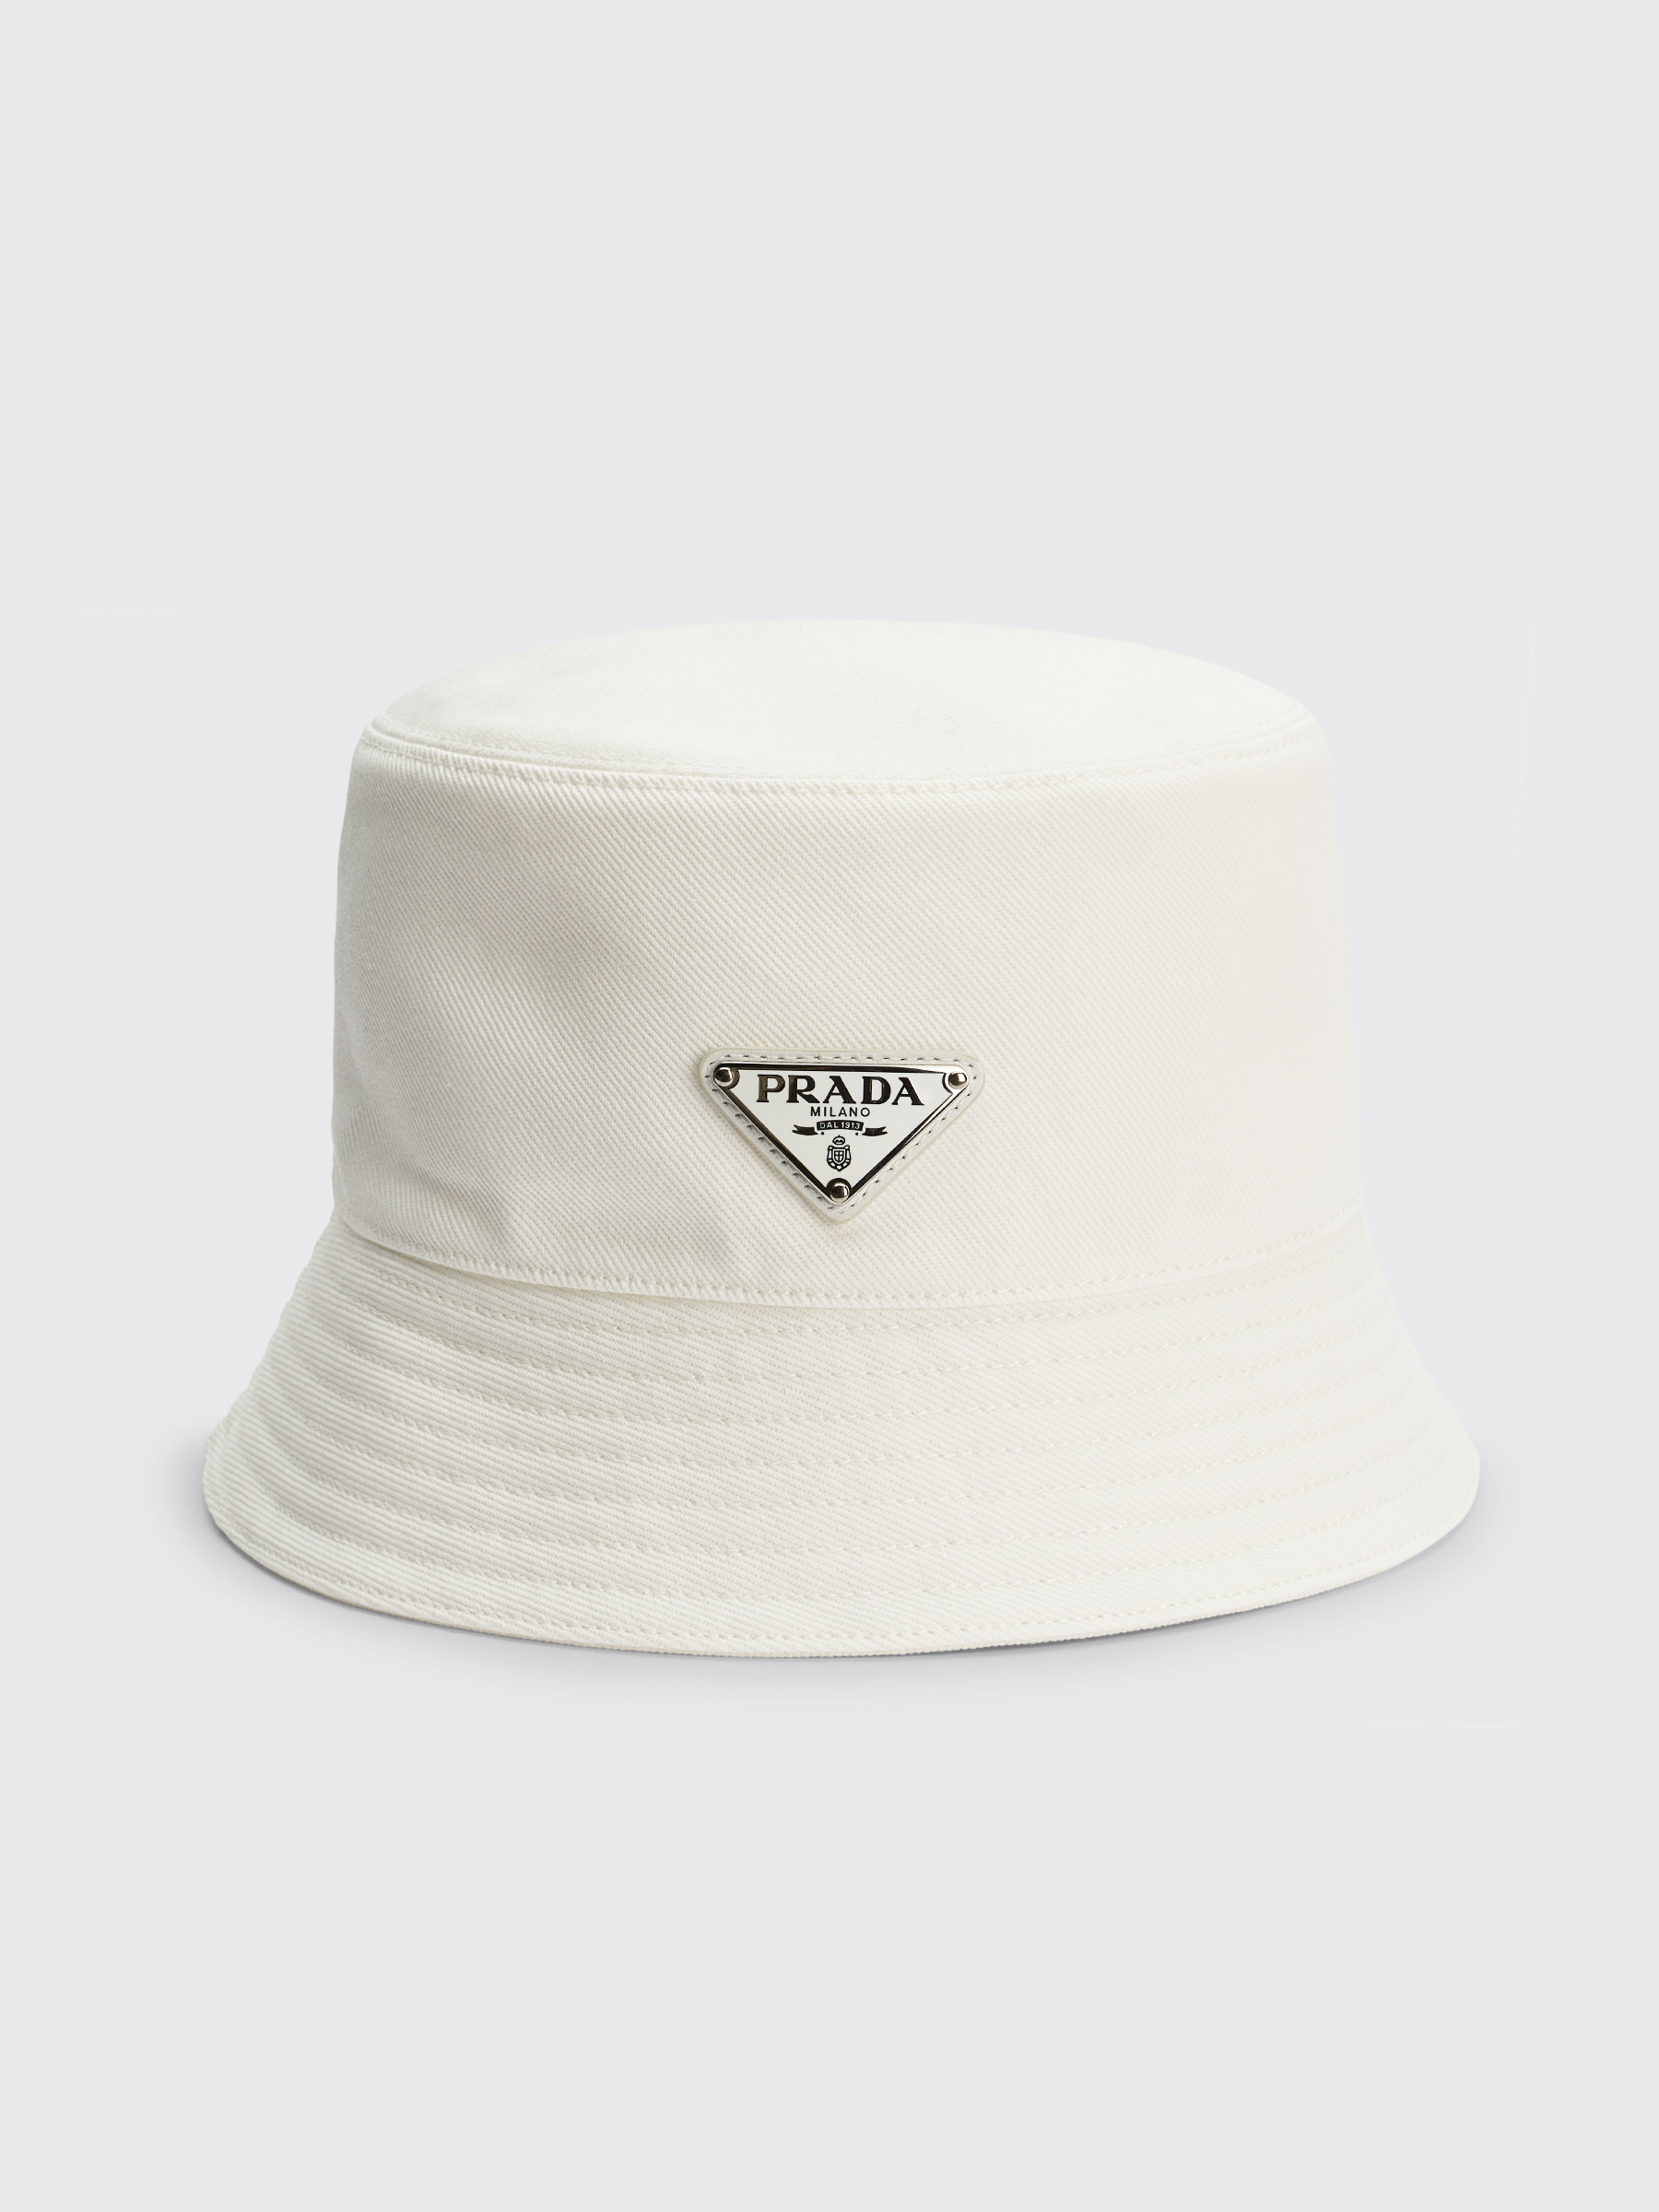 bewondering Woud Buik Très Bien - Prada Drill Cotton Bucket Hat Triangle Logo White